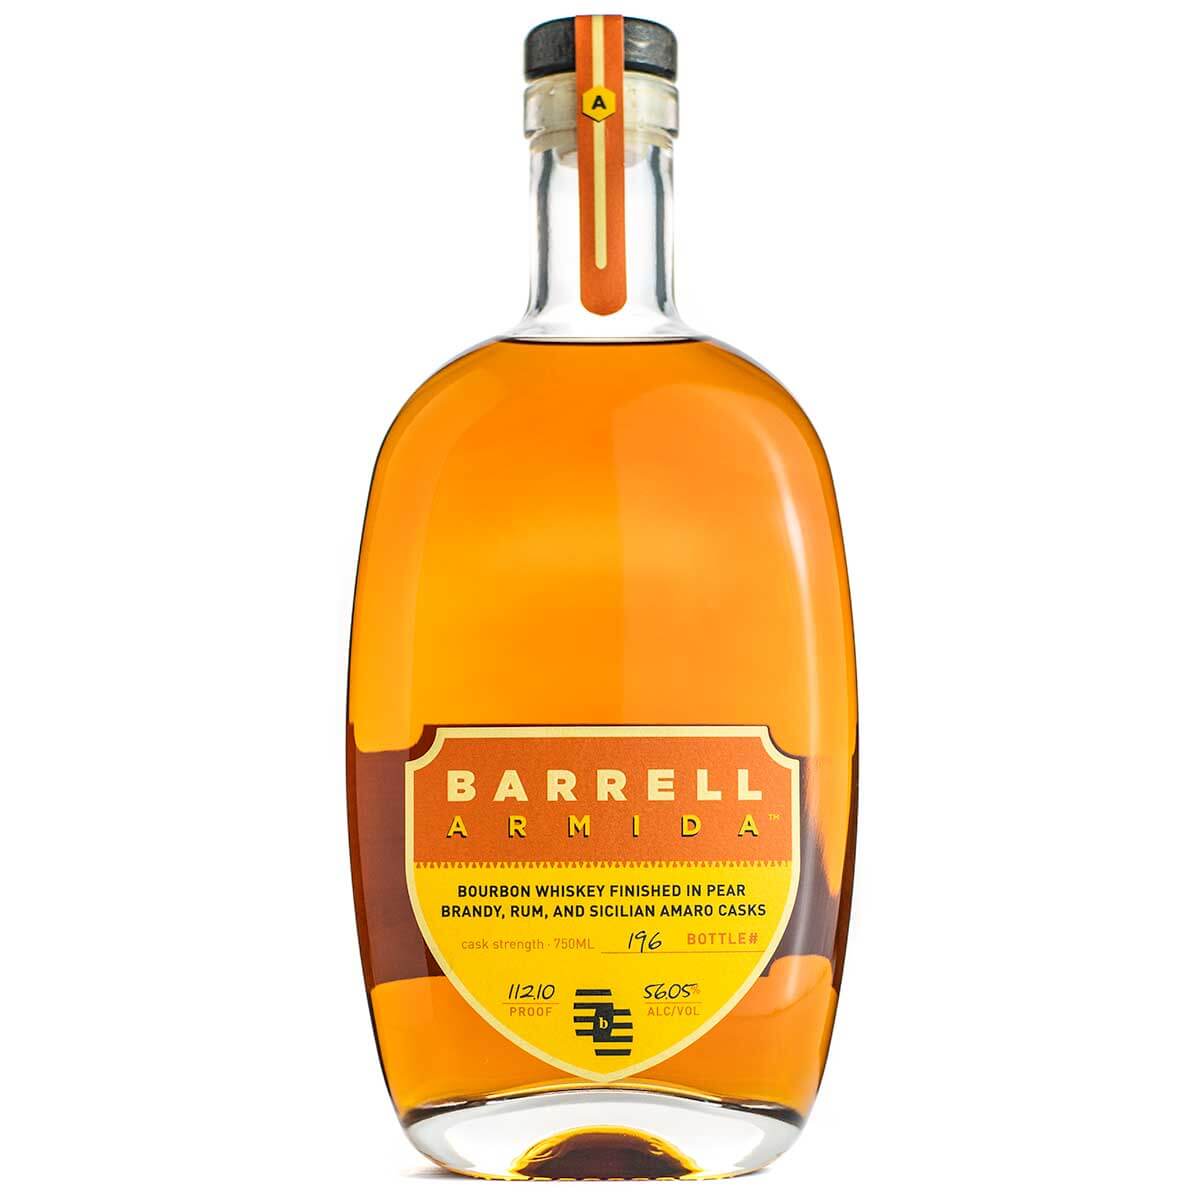 Barrell Armida bottle